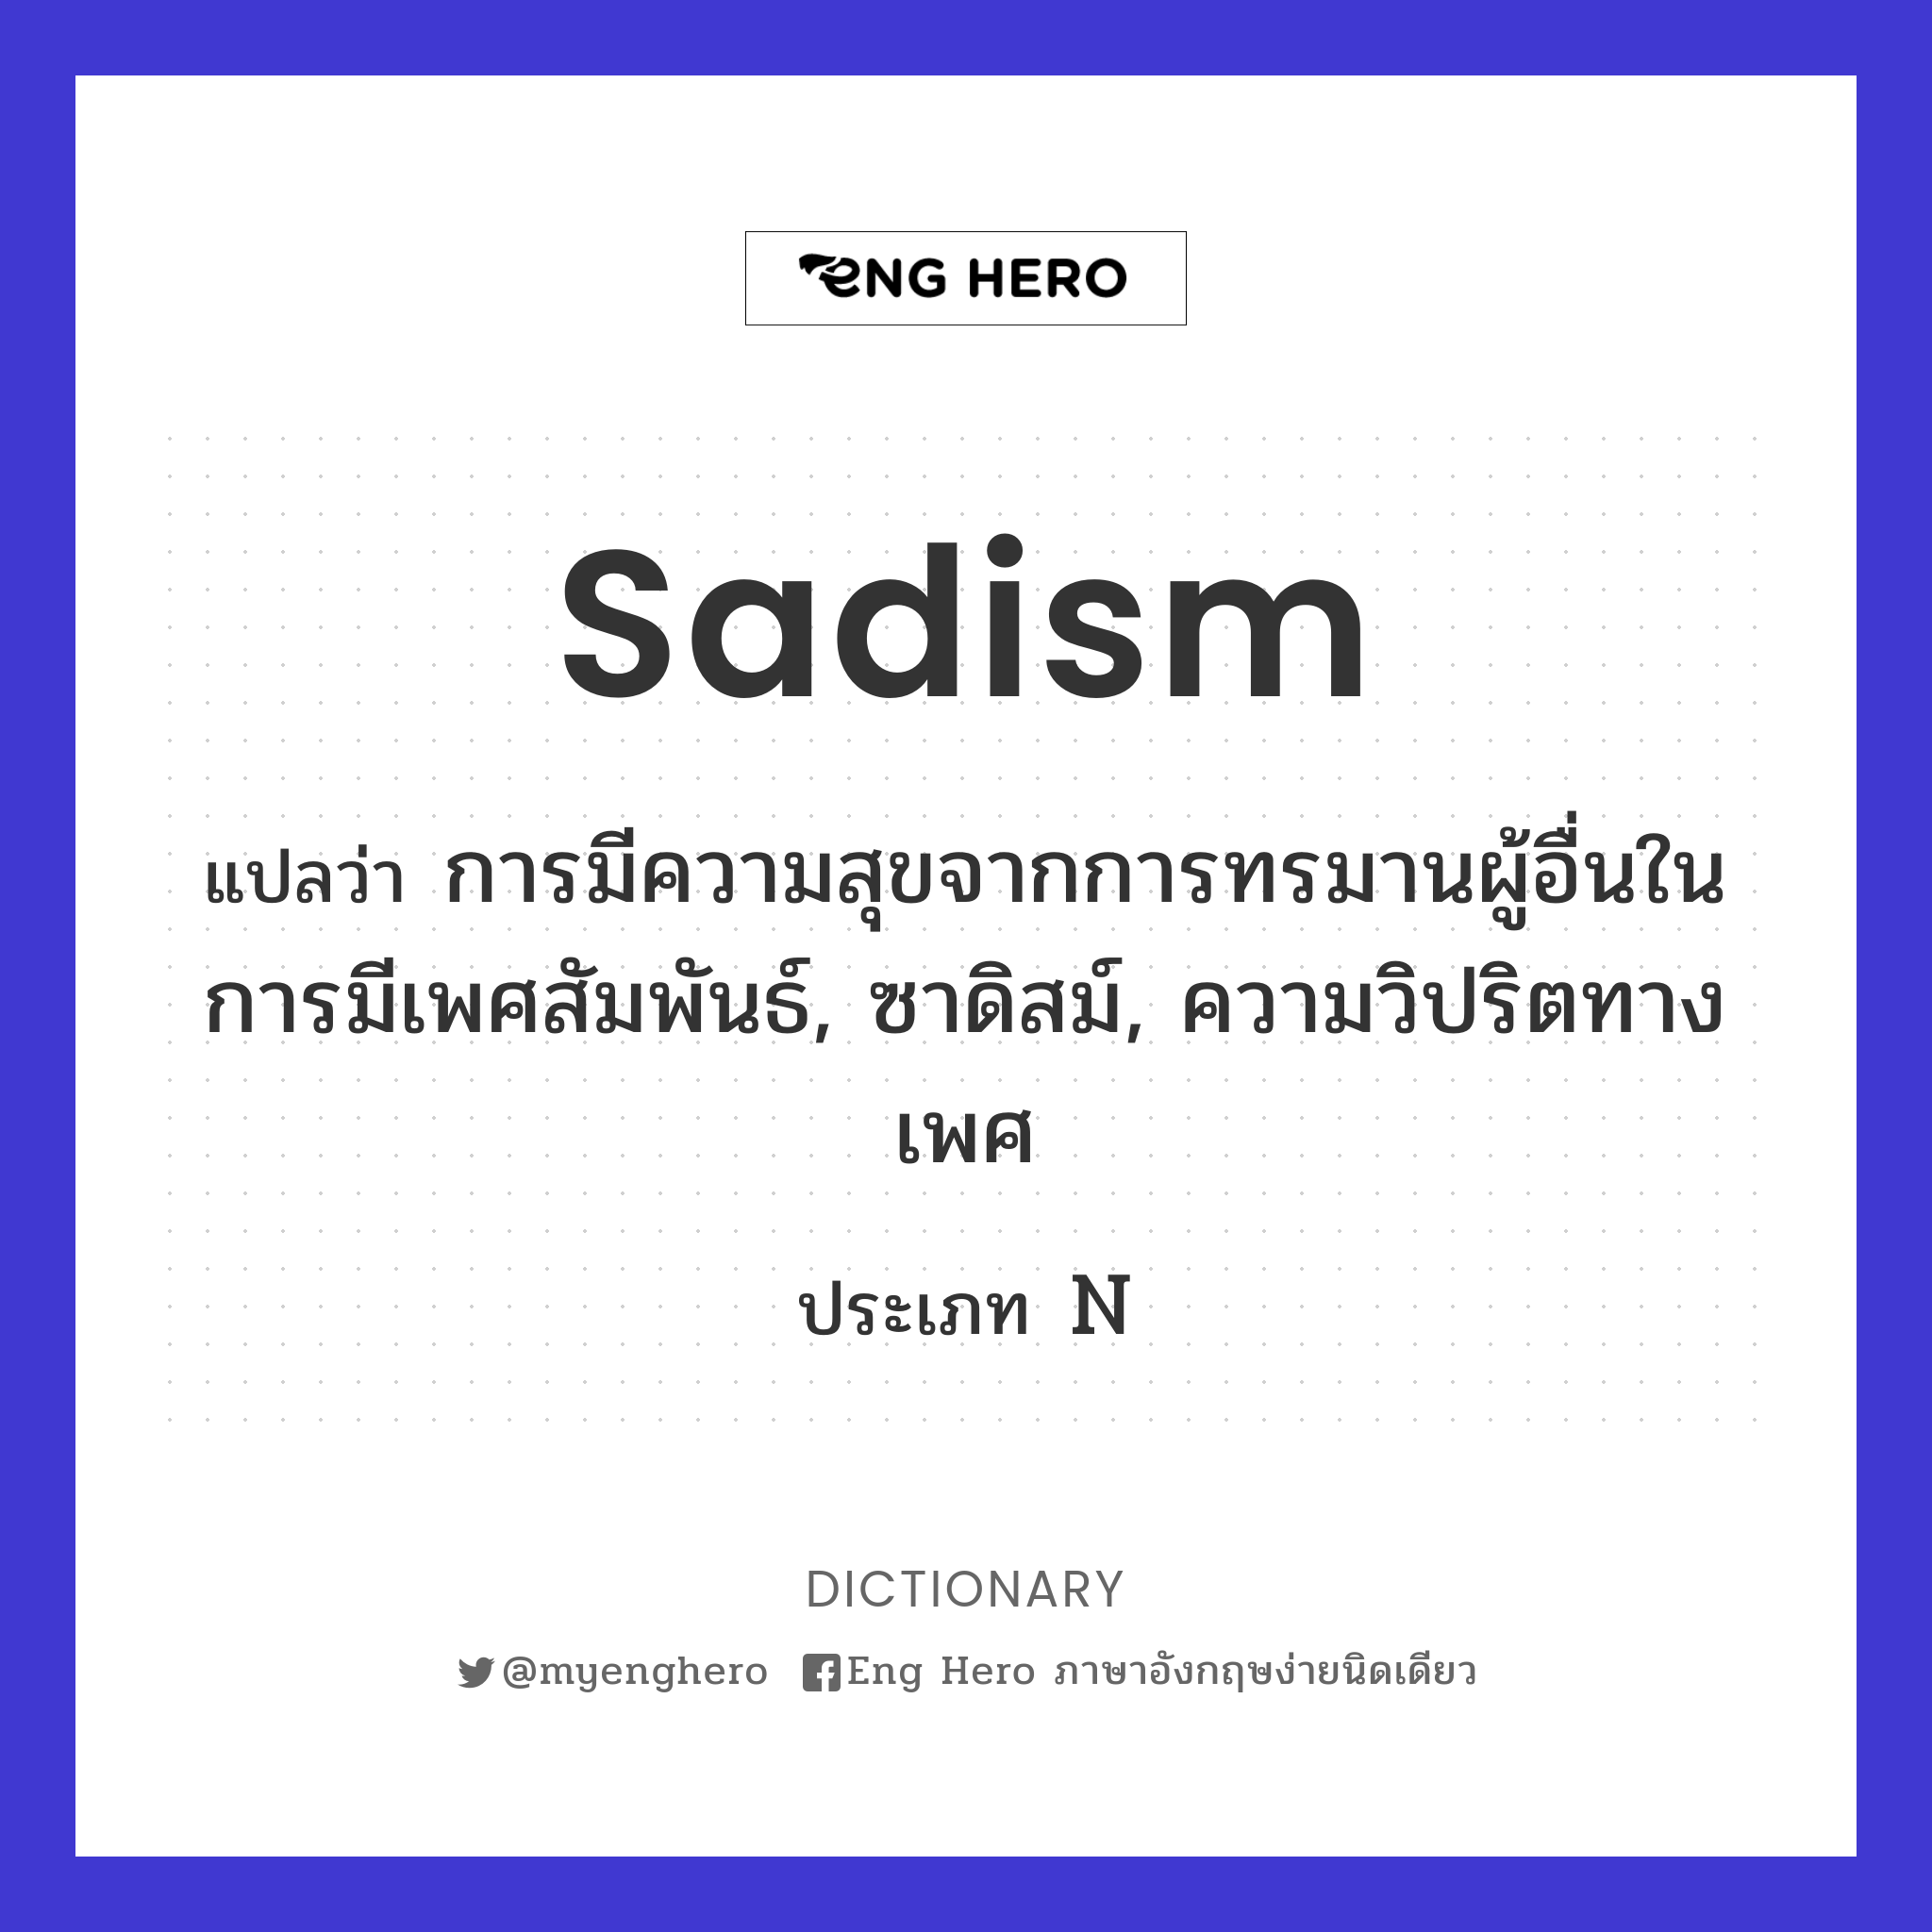 sadism